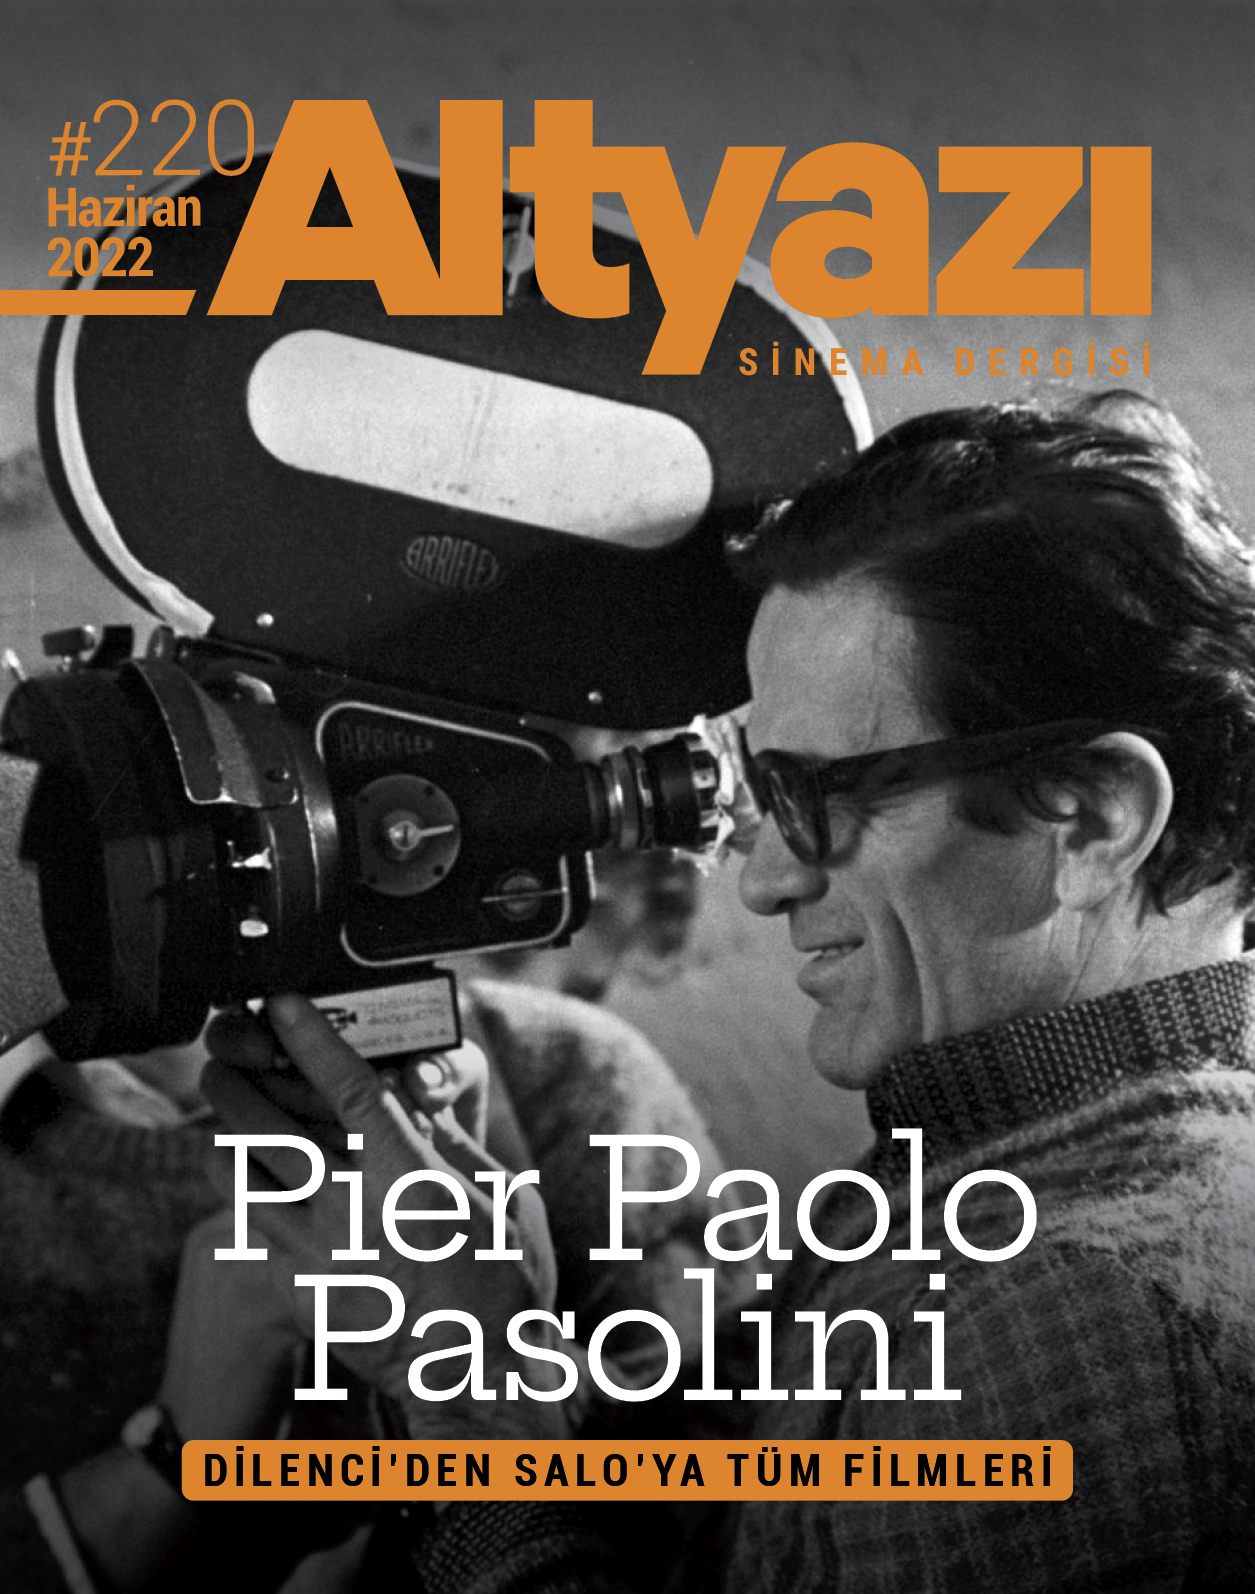 Altyazı Sinema Dergisi Pier Paolo Pasolini